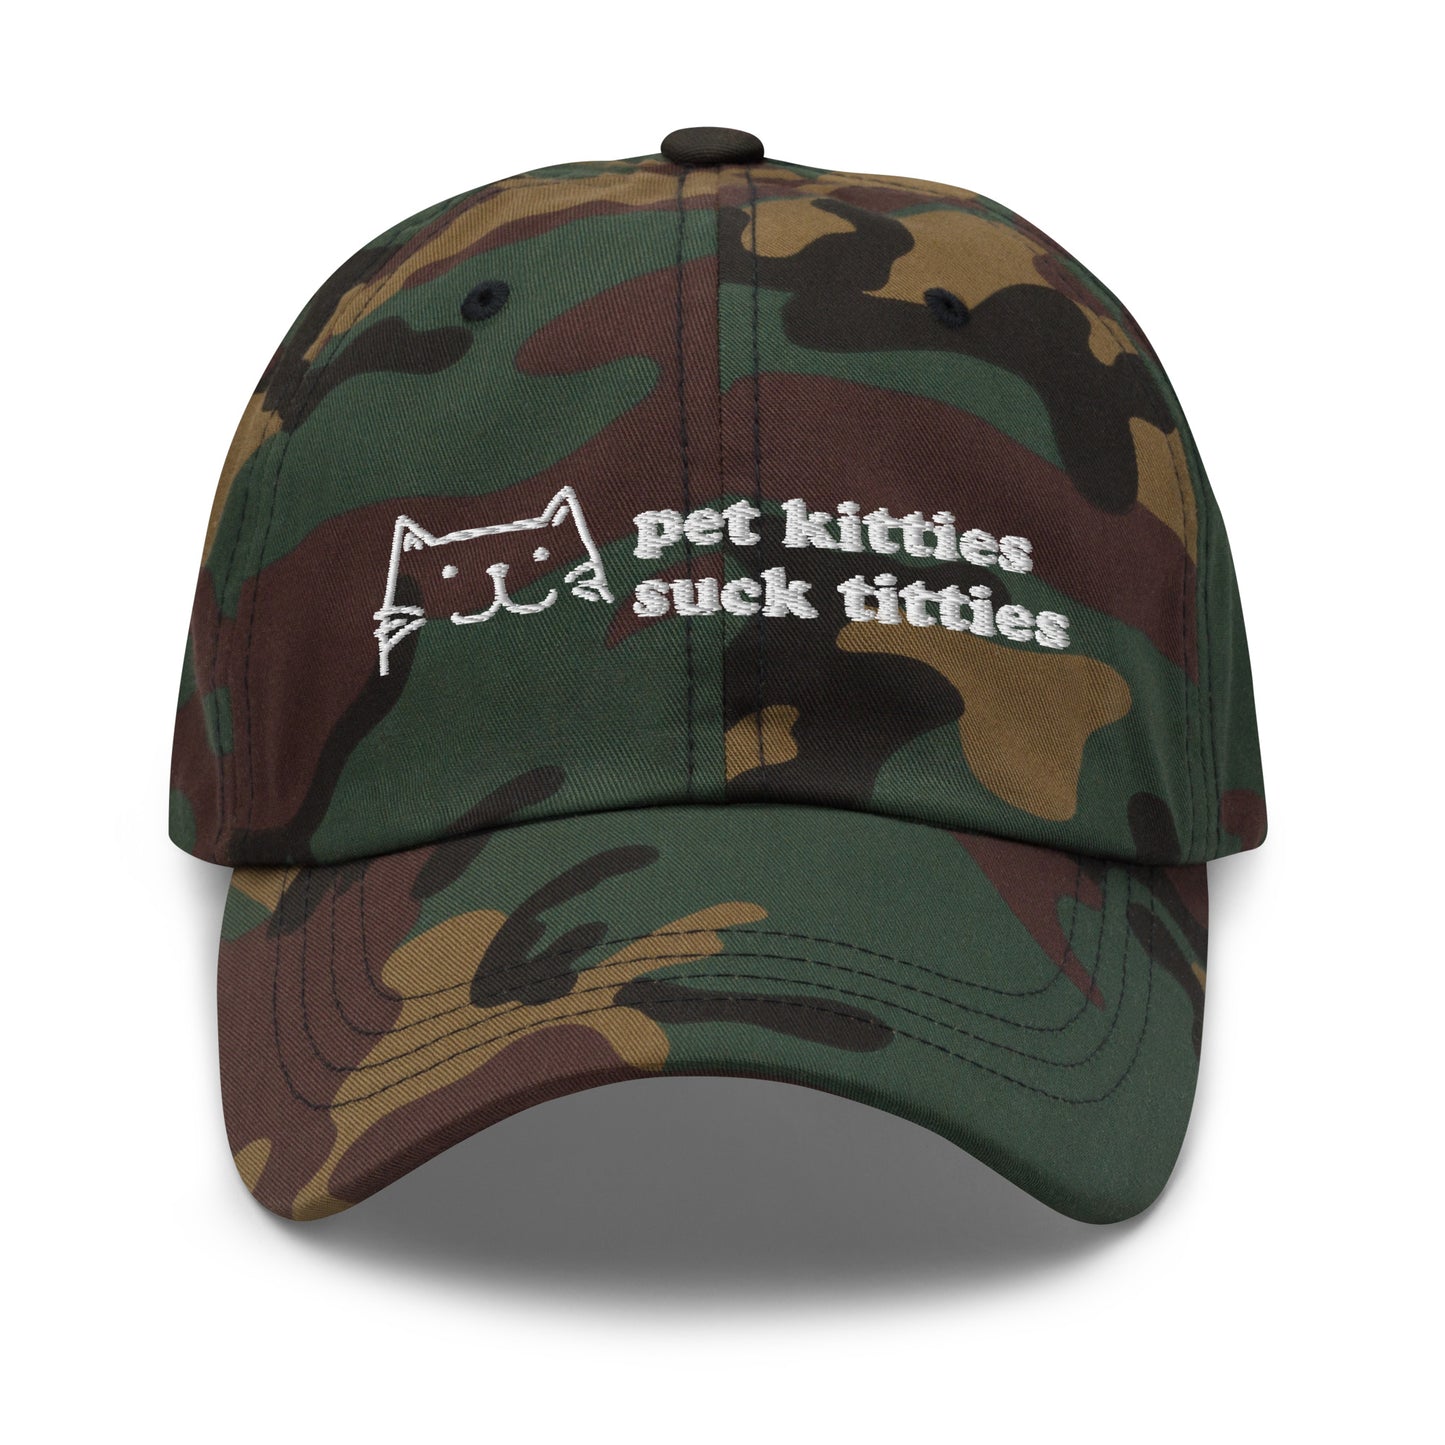 Pet Kitties hat